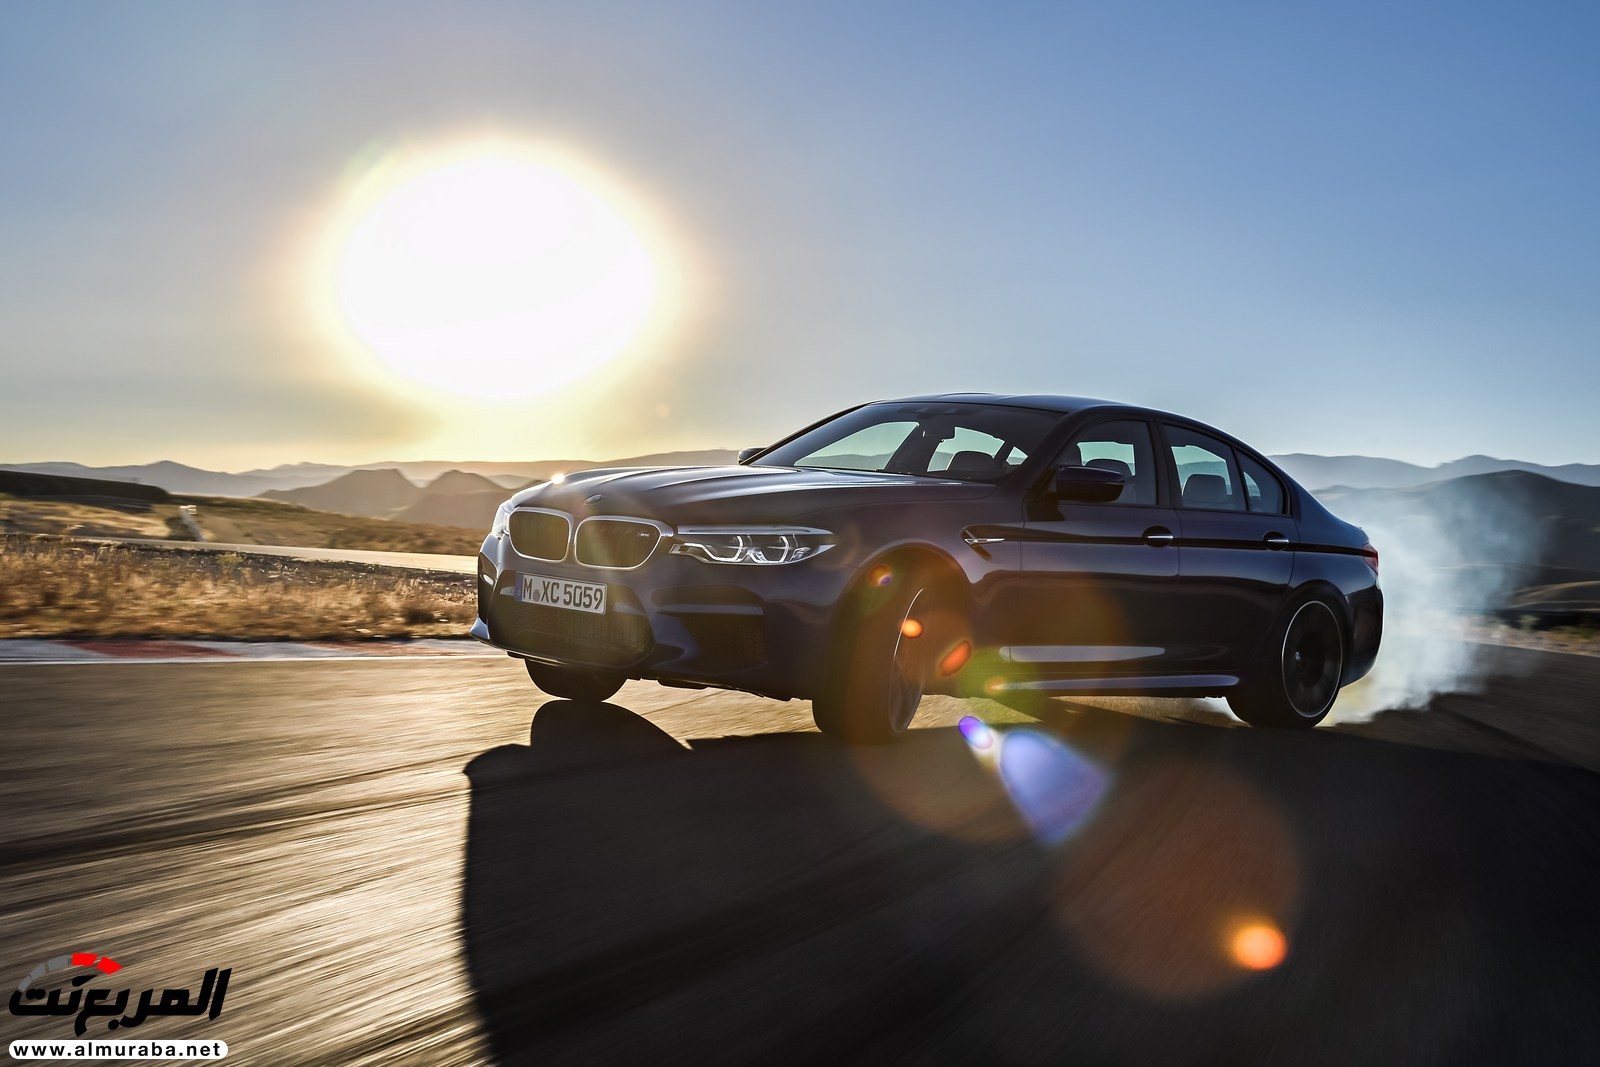 بي ام دبليو M5 2018 تكشف نفسها رسمياً بقوة ٦٠٠ حصان "صور ومواصفات" BMW 148